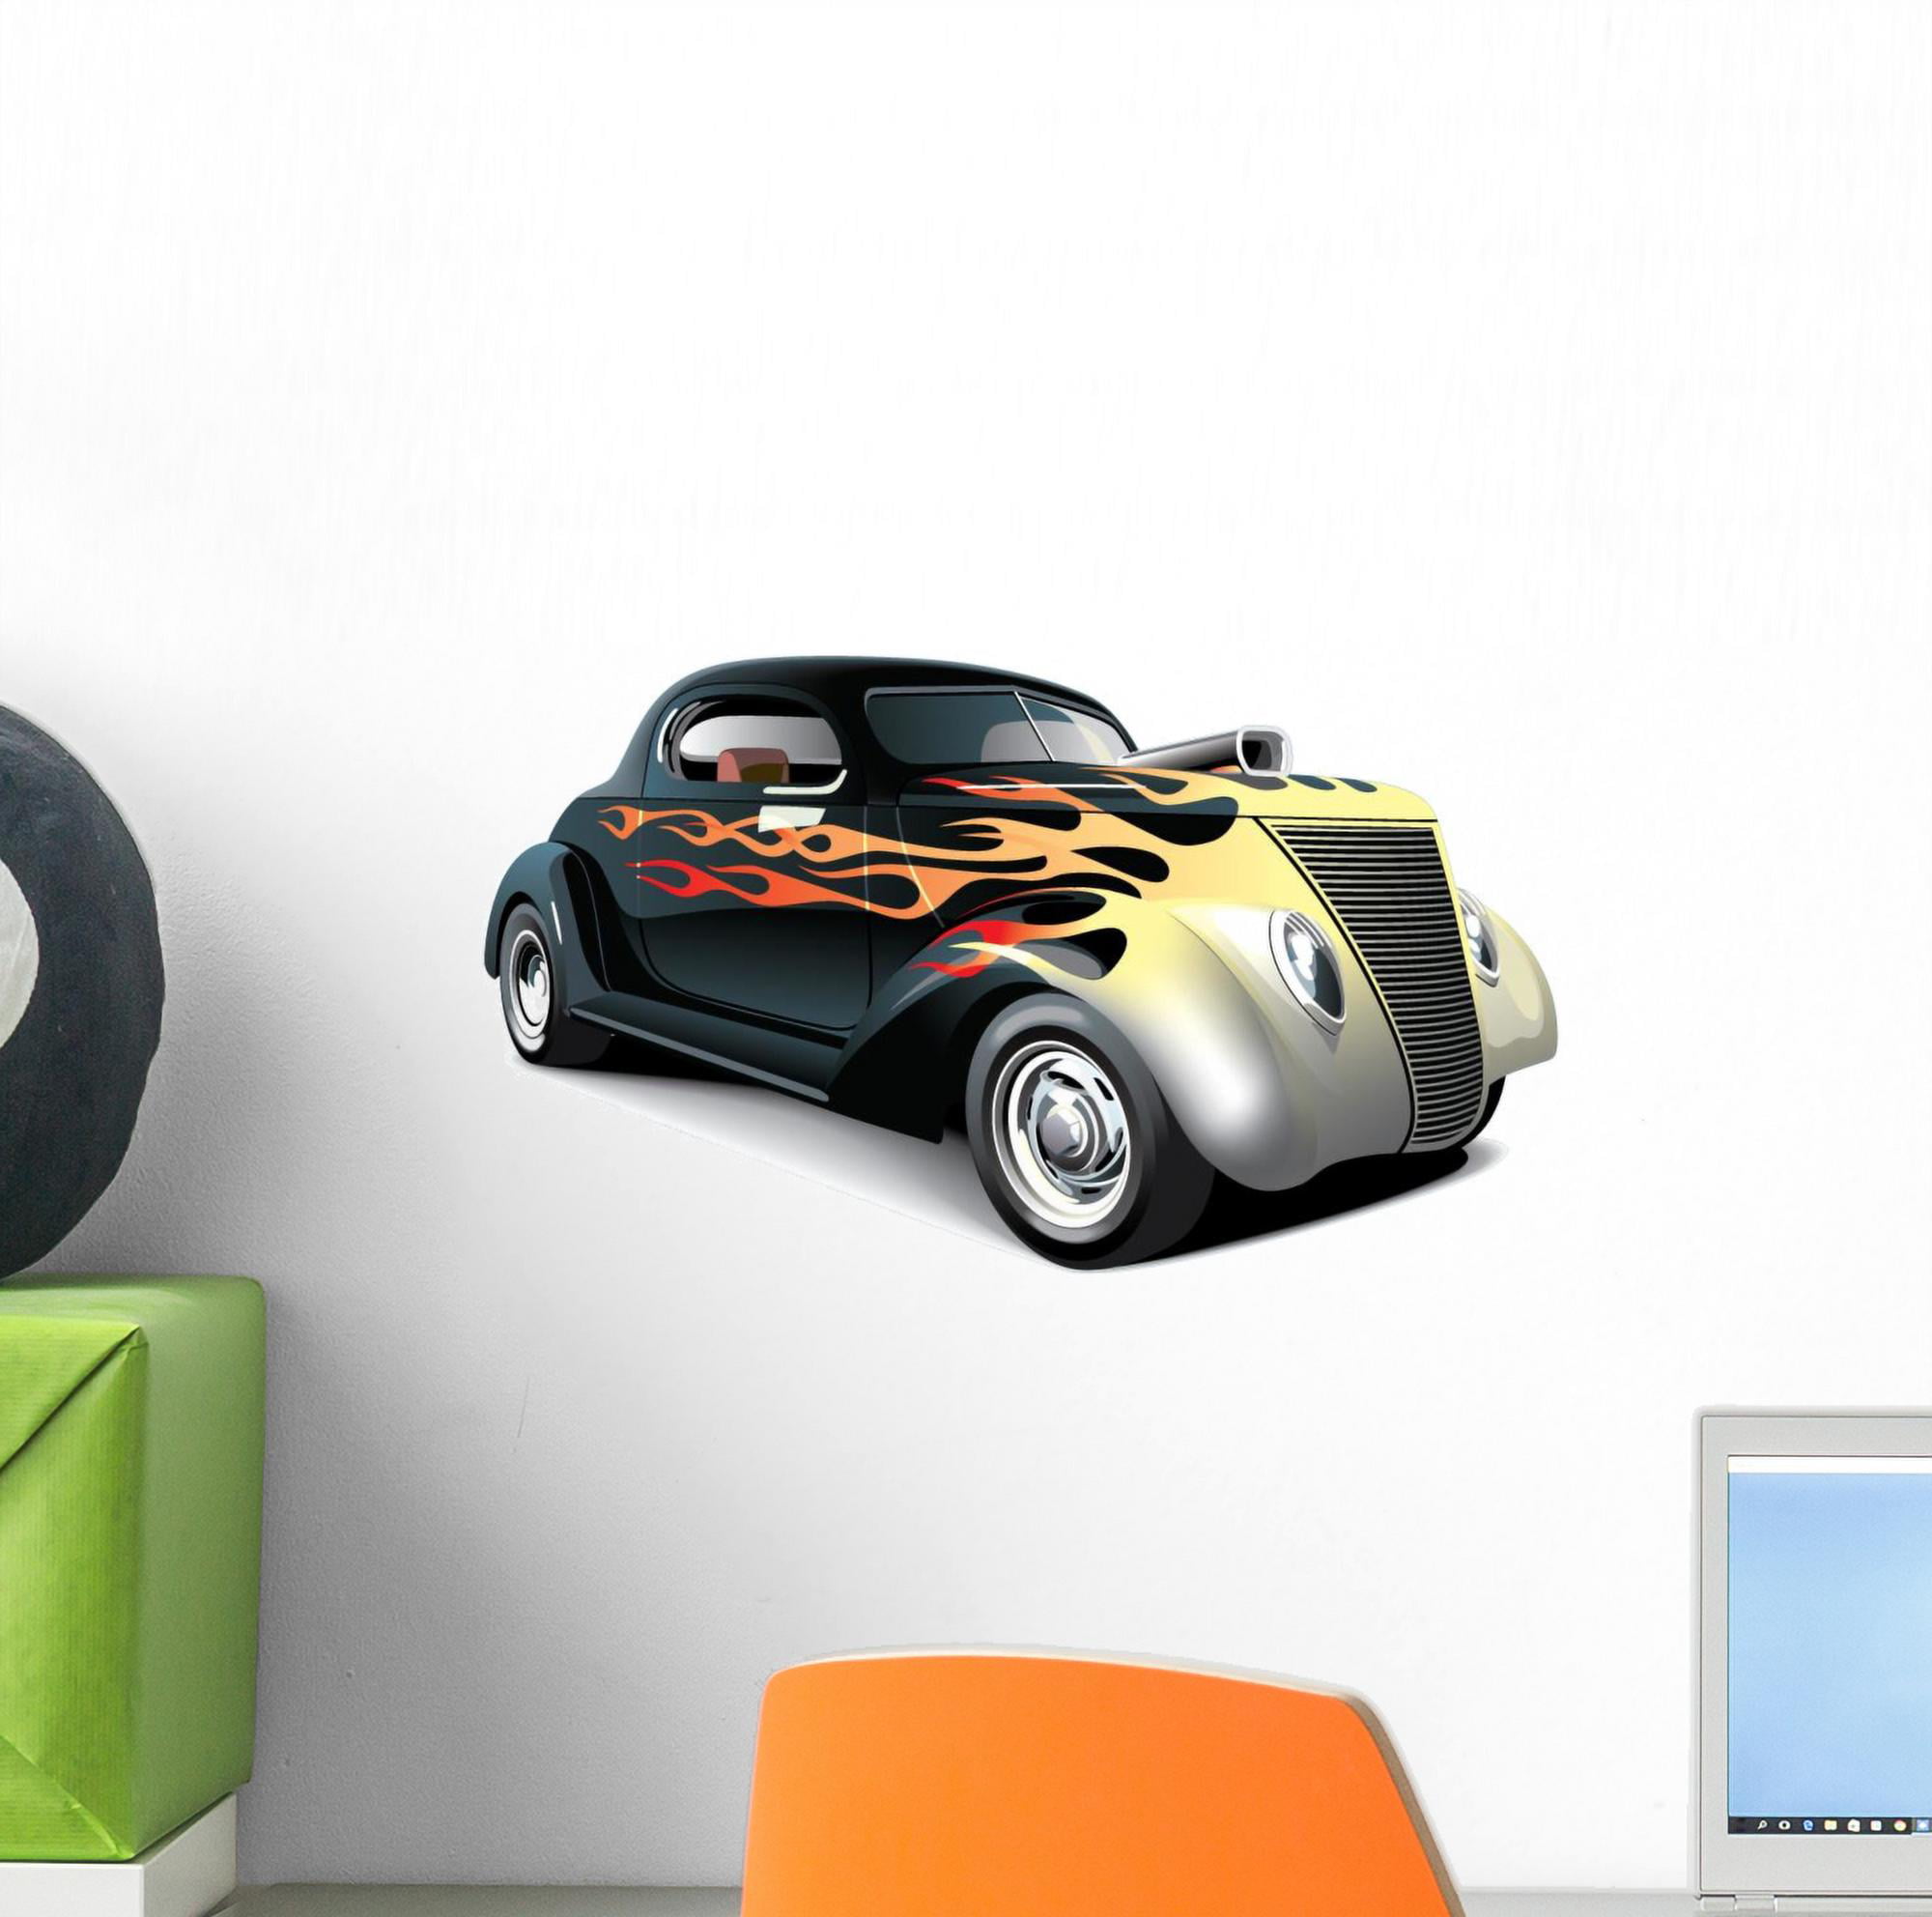 Hot Rod Flame Snoopy Adhesive Vinyl Decal Sticker Car Truck Window Bumper 7" 